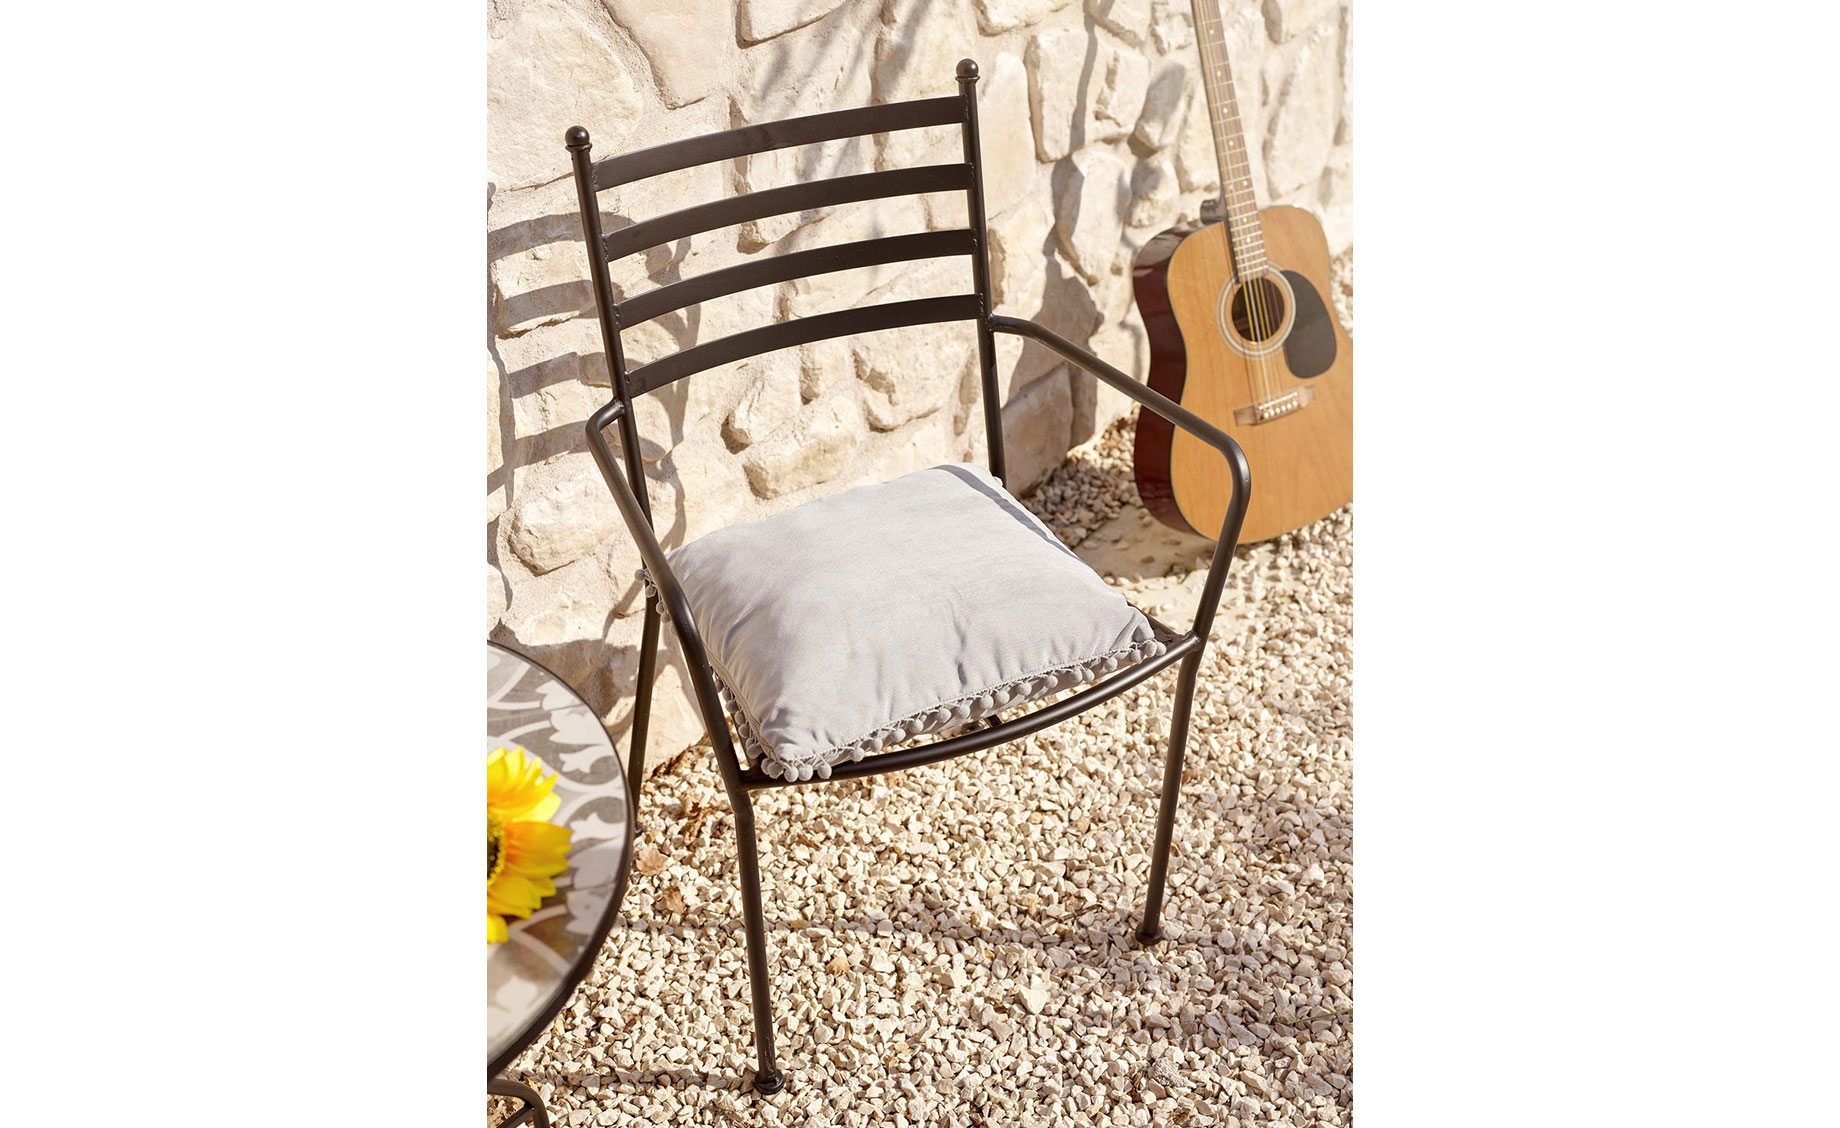 Alina stolica sa rukonaslonima 47x44x93 cm crni metal